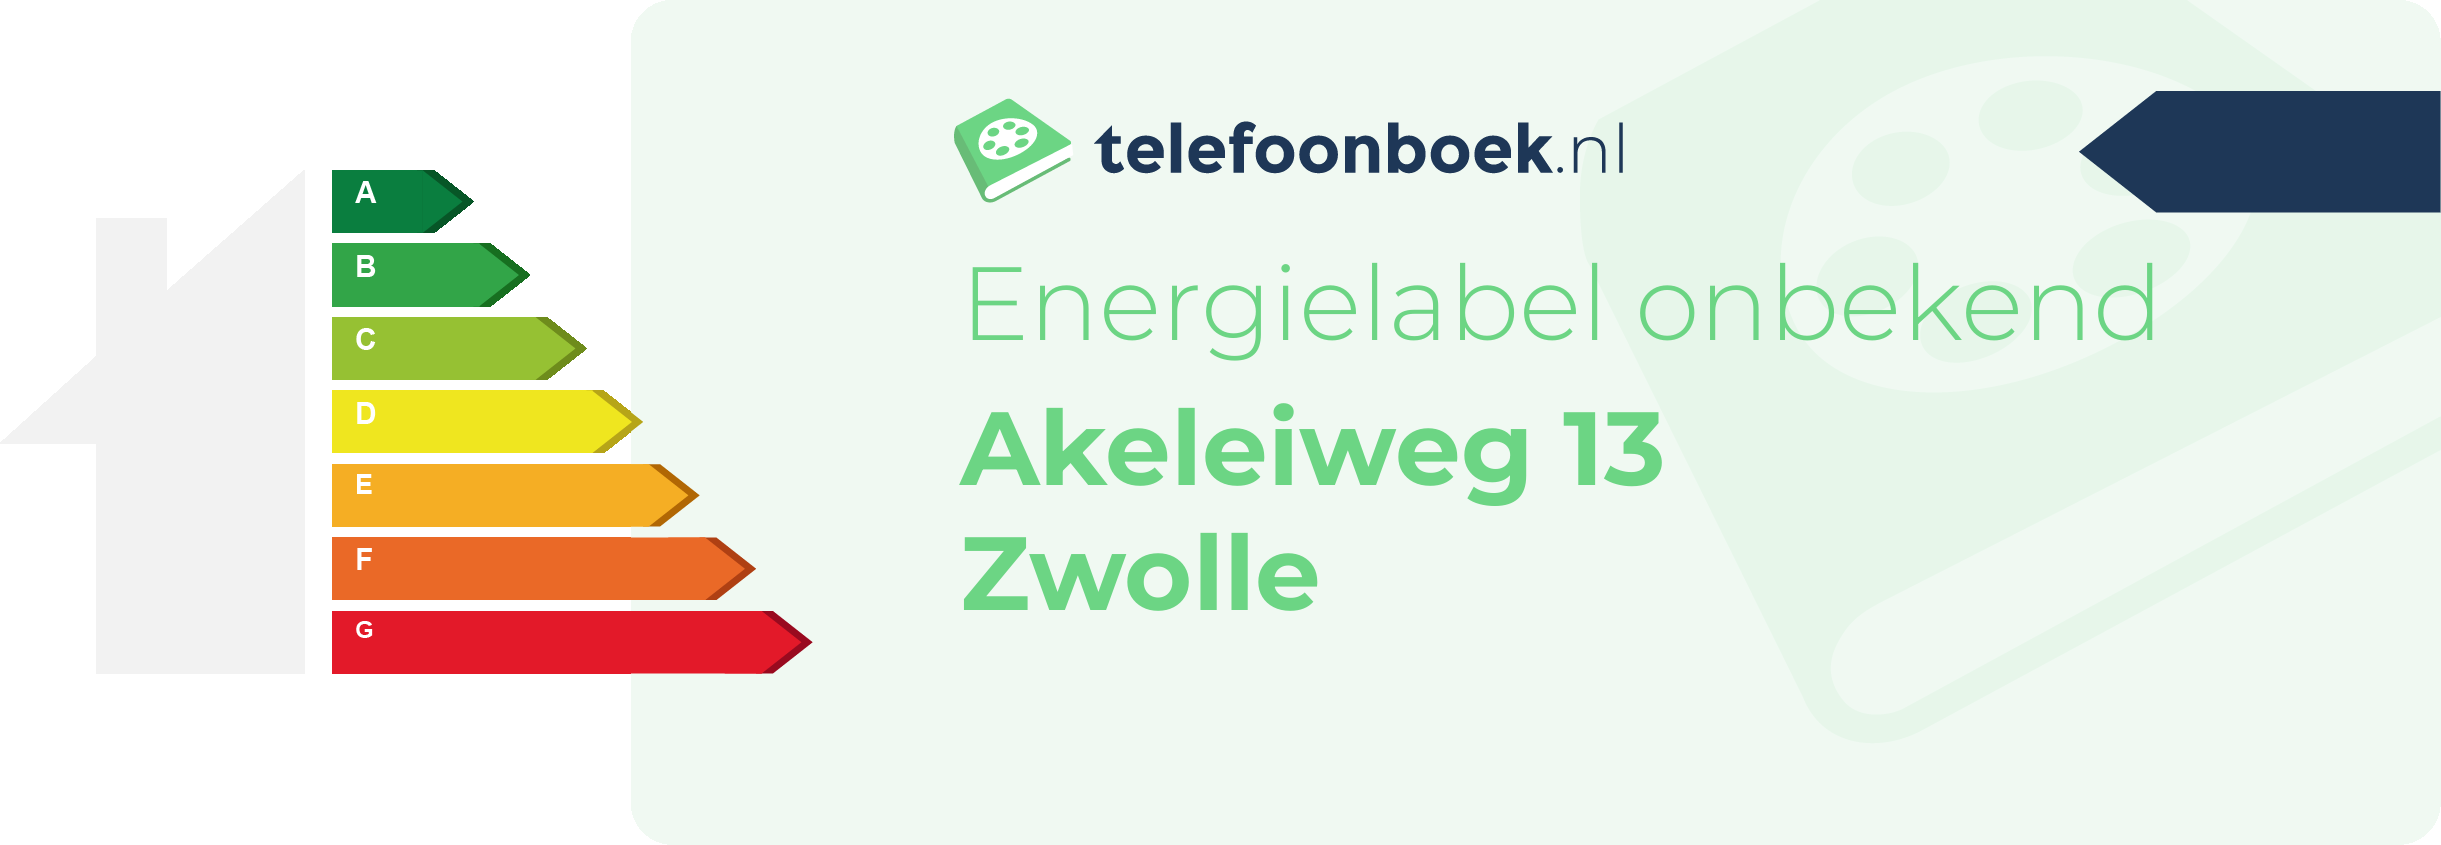 Energielabel Akeleiweg 13 Zwolle